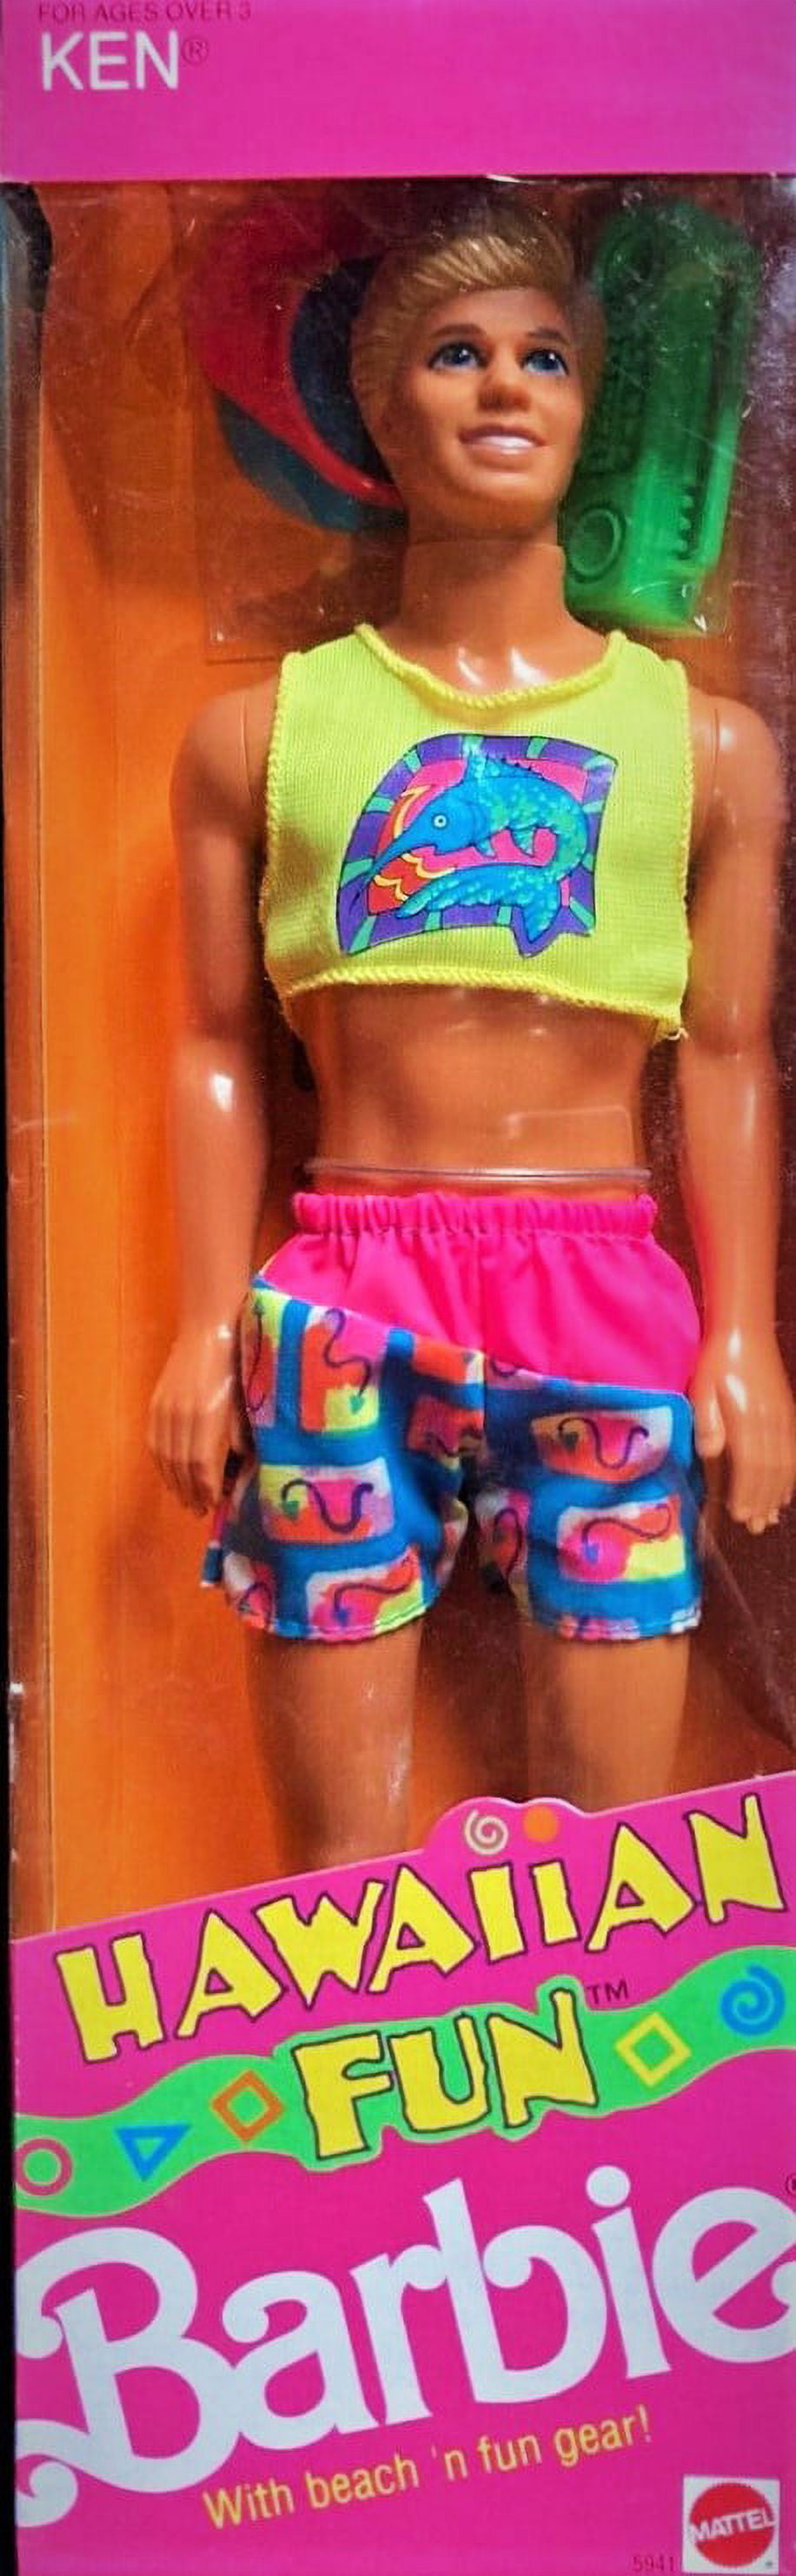 Met andere bands Shinkan tong Hawaiian Fun Ken Doll Friend of Barbie Doll 1990 Mattel #5941 - Walmart.com